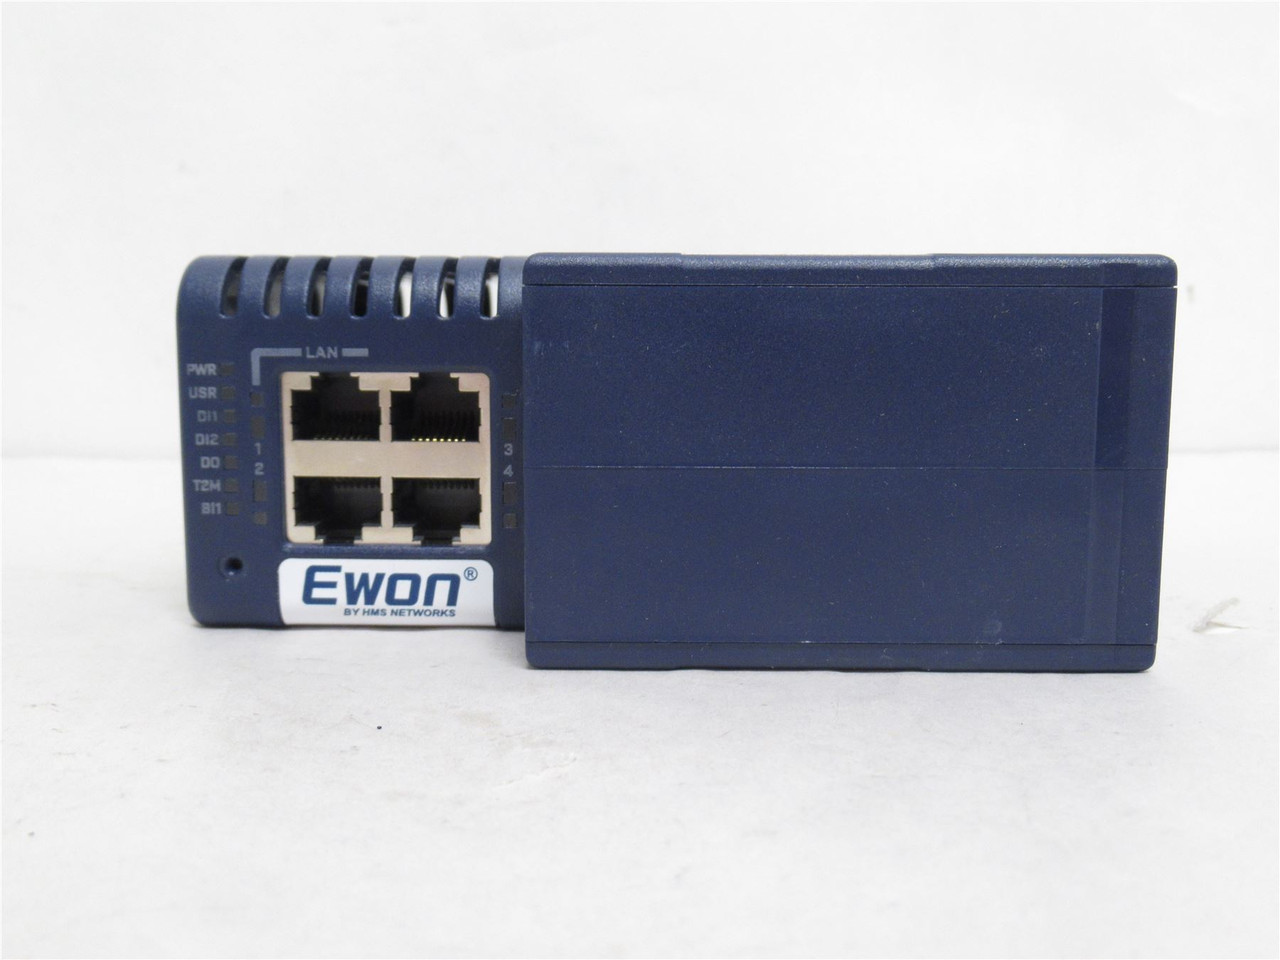 Ewon FLEXY20500_00MA/S; Flexy 4-Wire Gateway and Remote Access